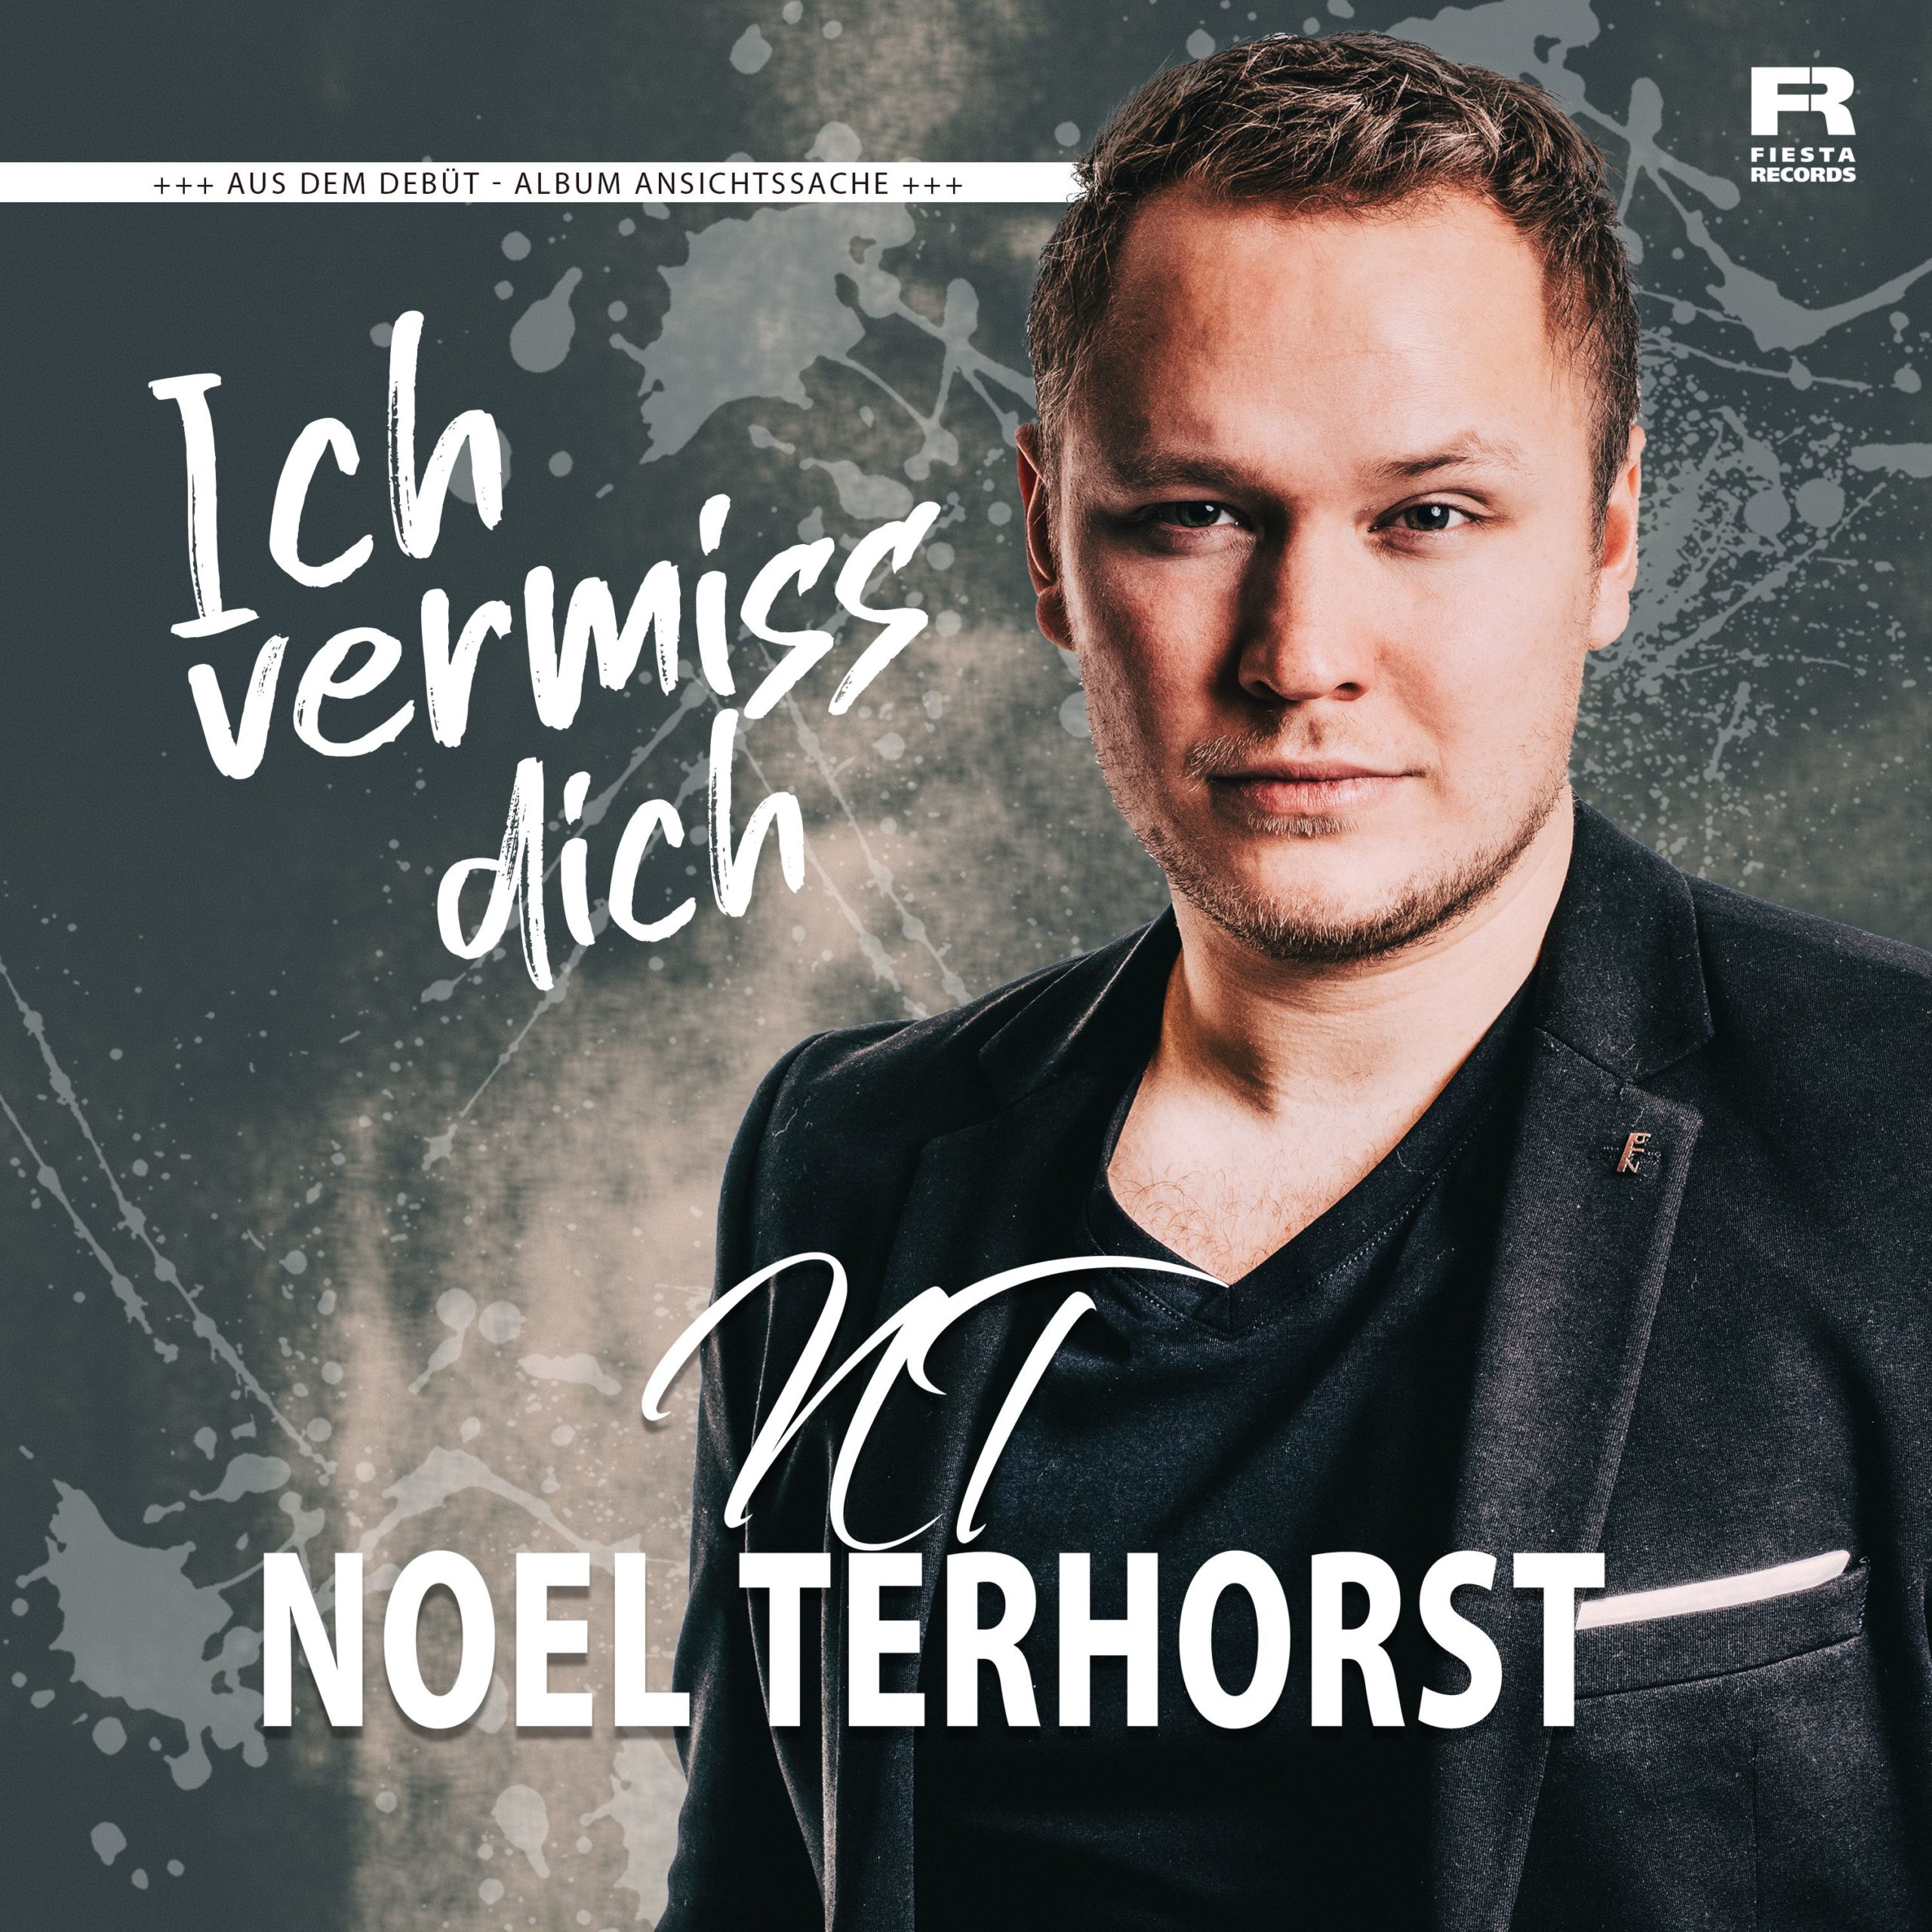 Noel Terhorst - Ich vermiss dich (2020) Cover